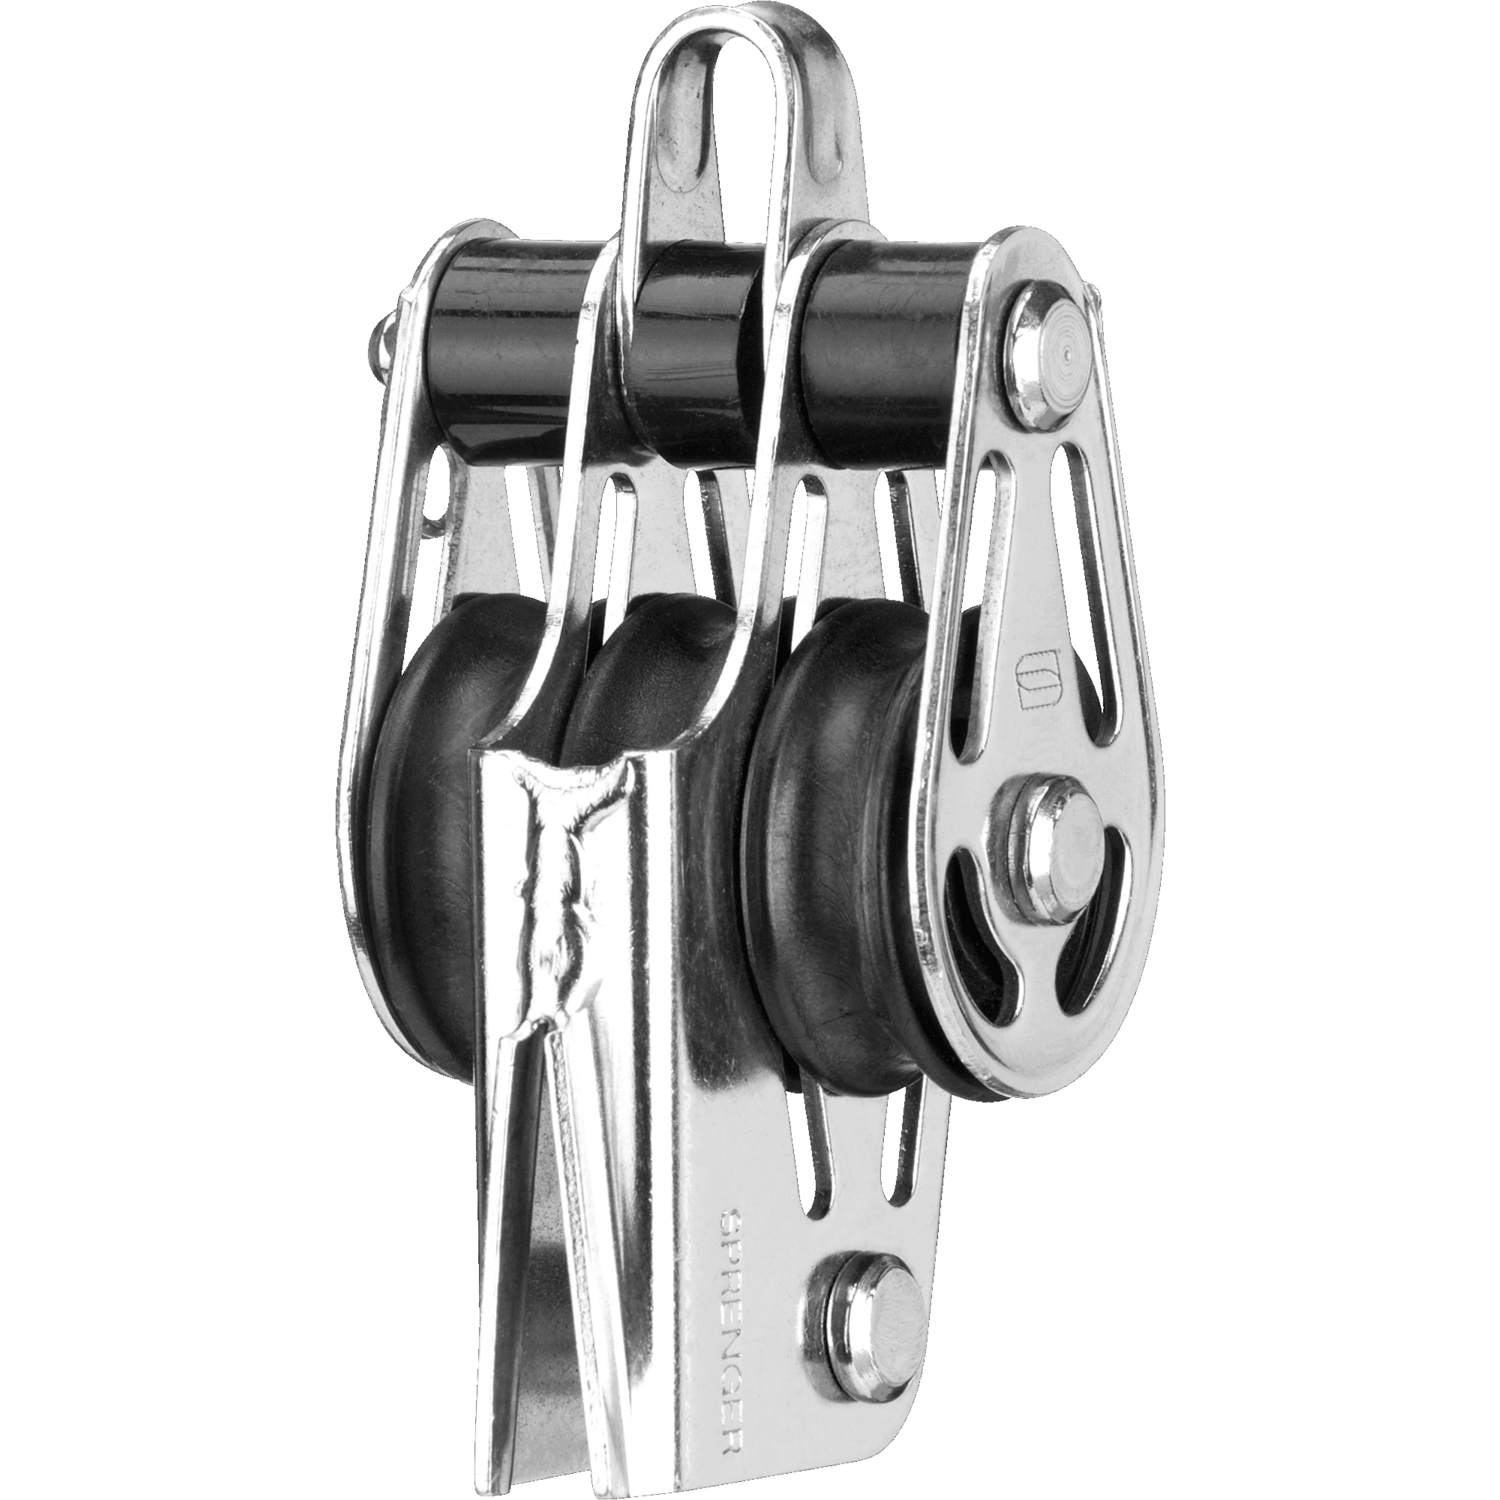 V-Klemmenblock Gleitlager 6 mm - 3 Rollen, Bügel, Hundsfott | 3512000355.png | 1700897490